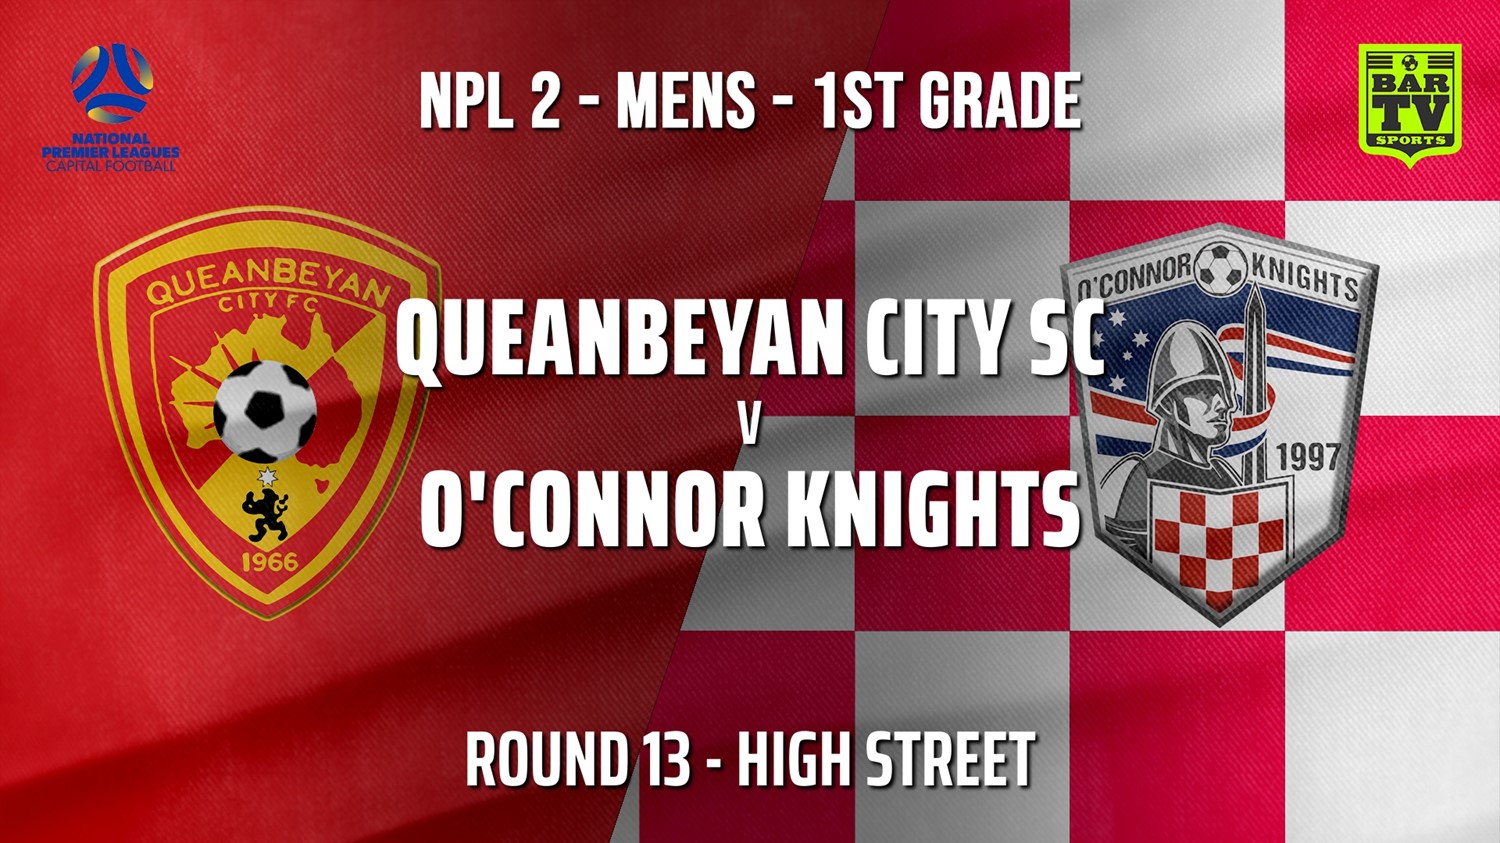 210708-NPL 2 Men - 1st Grade - Capital Round 13 - Queanbeyan City SC v O'Connor Knights Slate Image